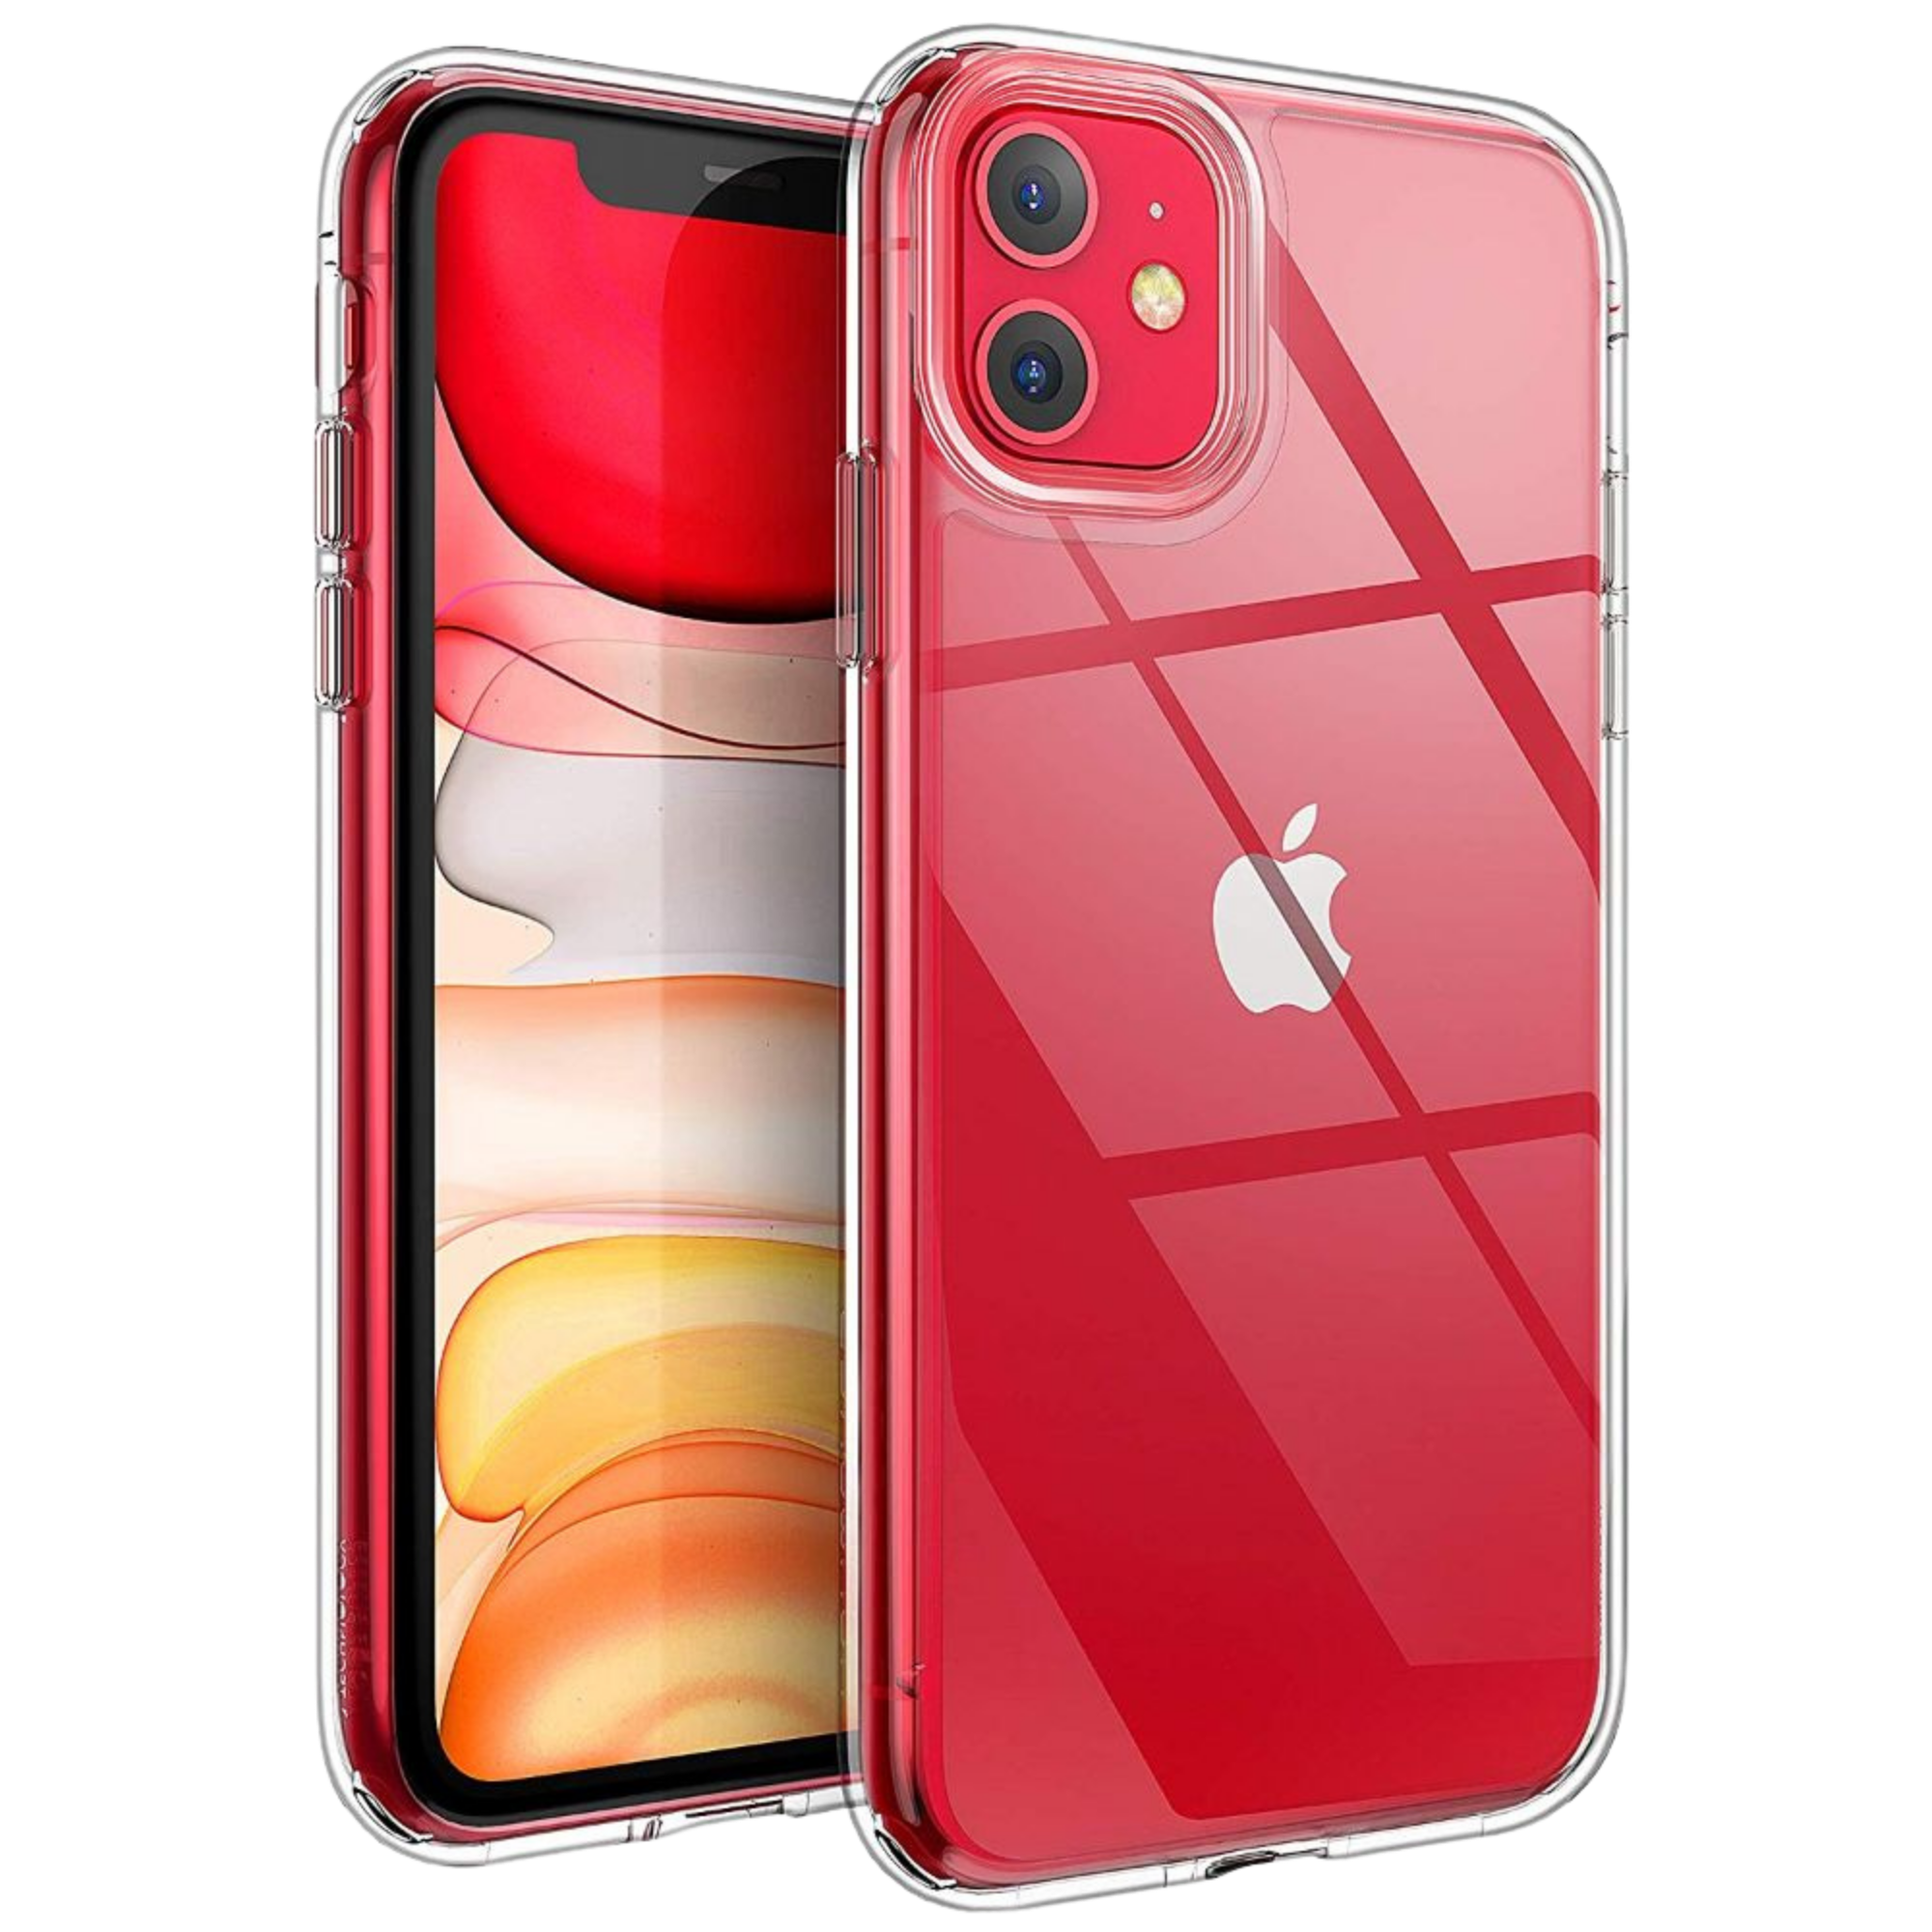 iPhone 11 (PRODUCT)RED 128 GB容量128GB - スマートフォン本体